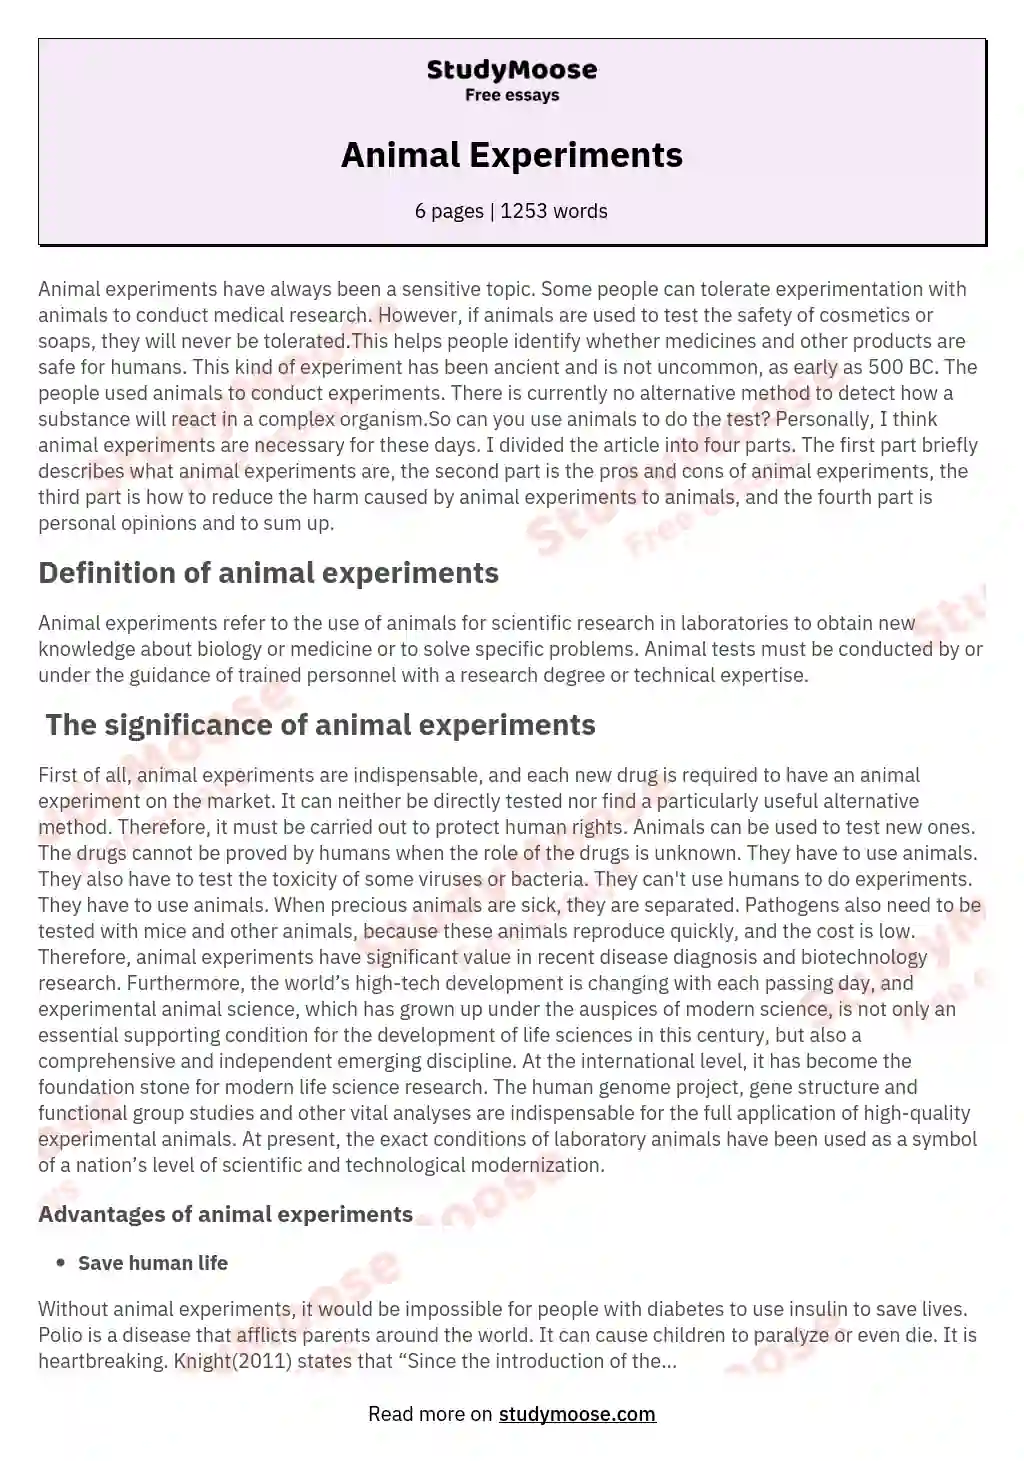 argumentative essay about animal experimentation